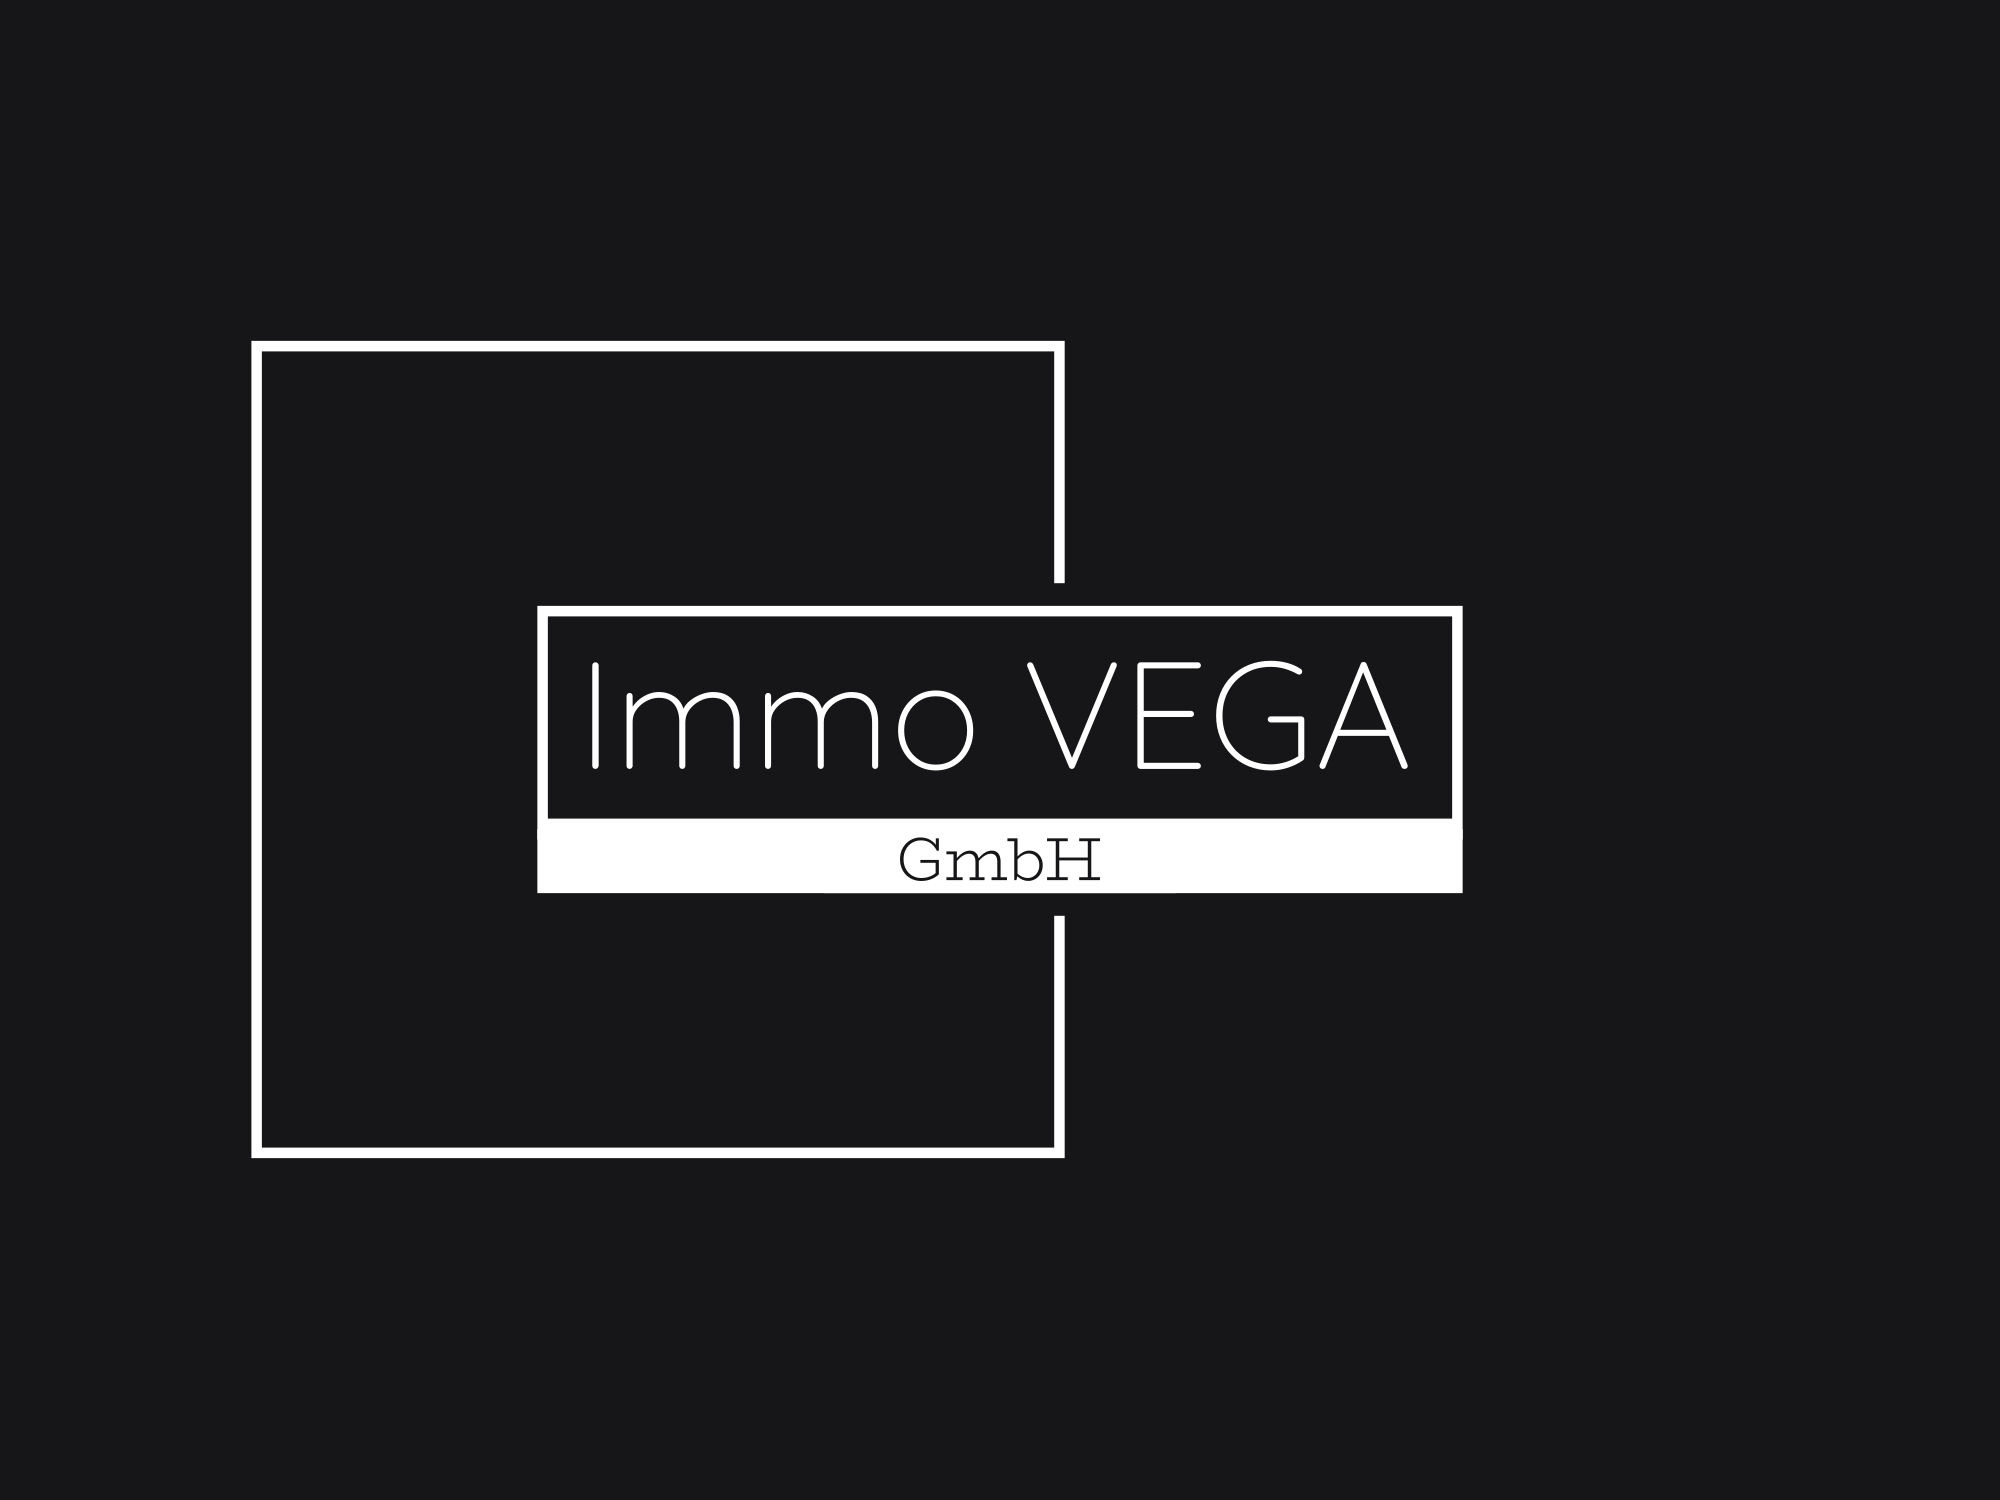 Immo VEGA GmbH